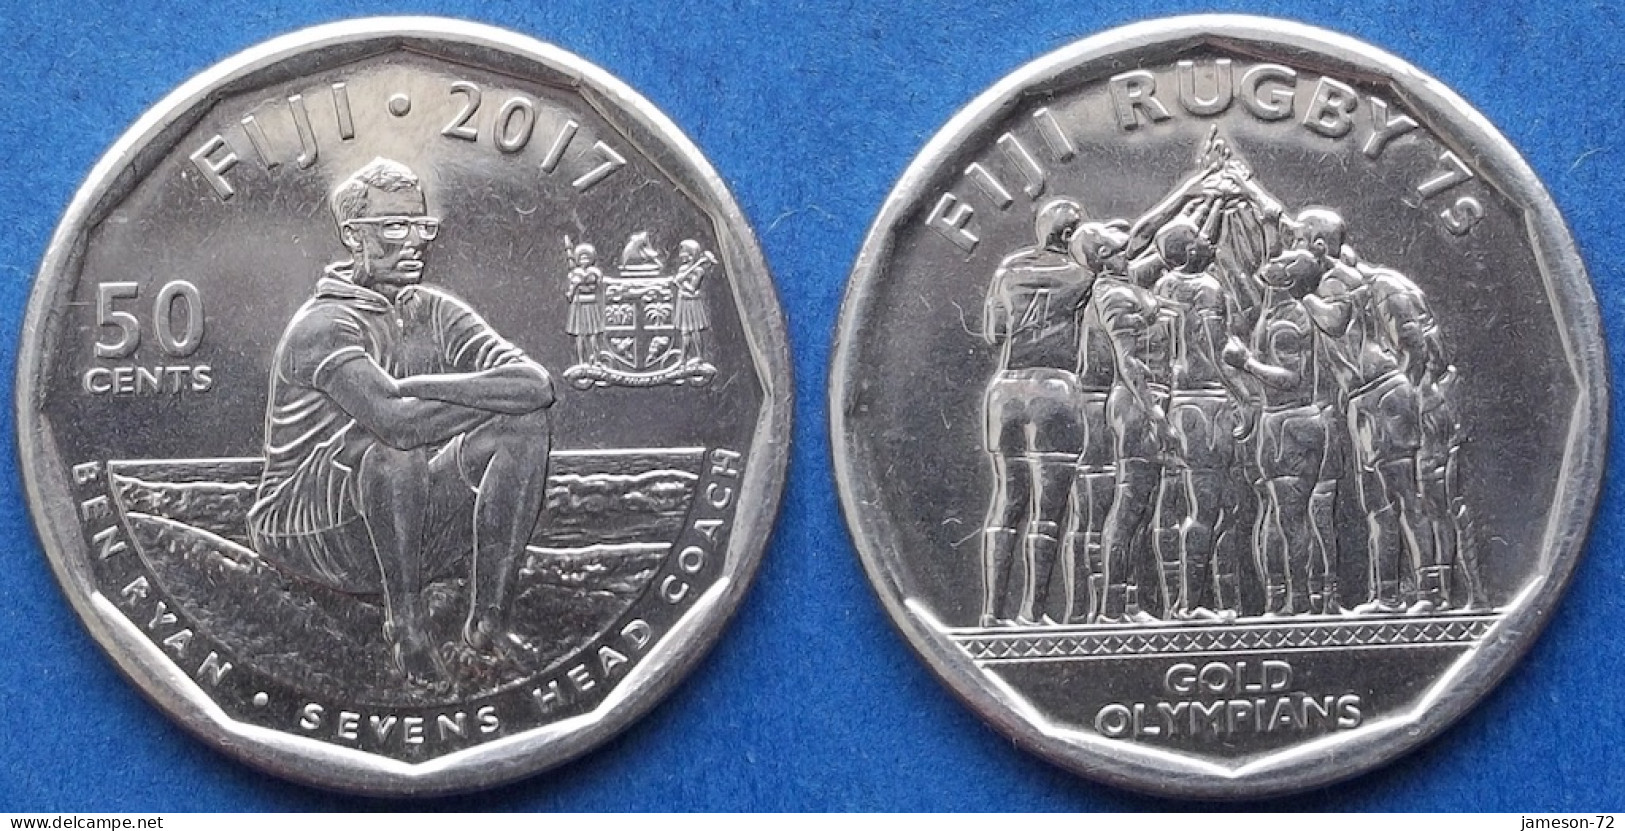 FIJI - 50 Cents 2017 "Fiji Rugby 7s - Gold Olympians" KM# 528 Elizabeth II Decimal Coinage (1971-2022) - Edelweiss Coins - Fidschi